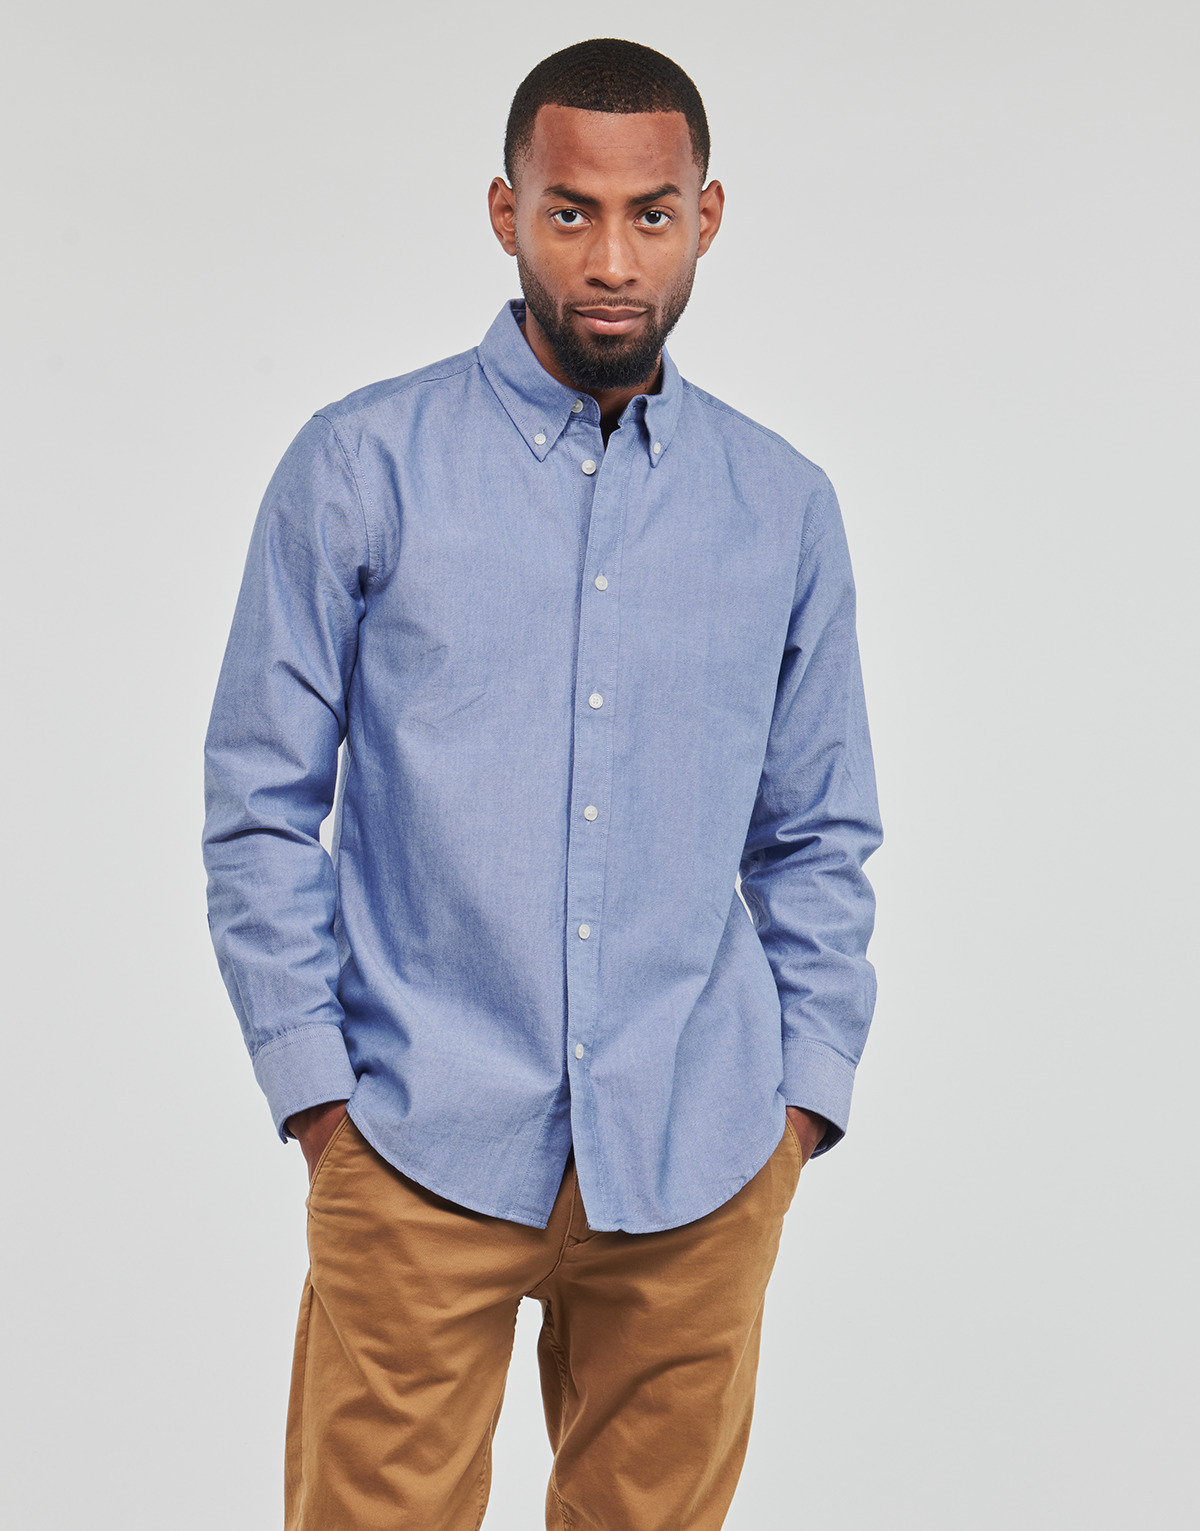 Textil Homem office-accessories key-chains women pens T Shirts oxford shirt Azul